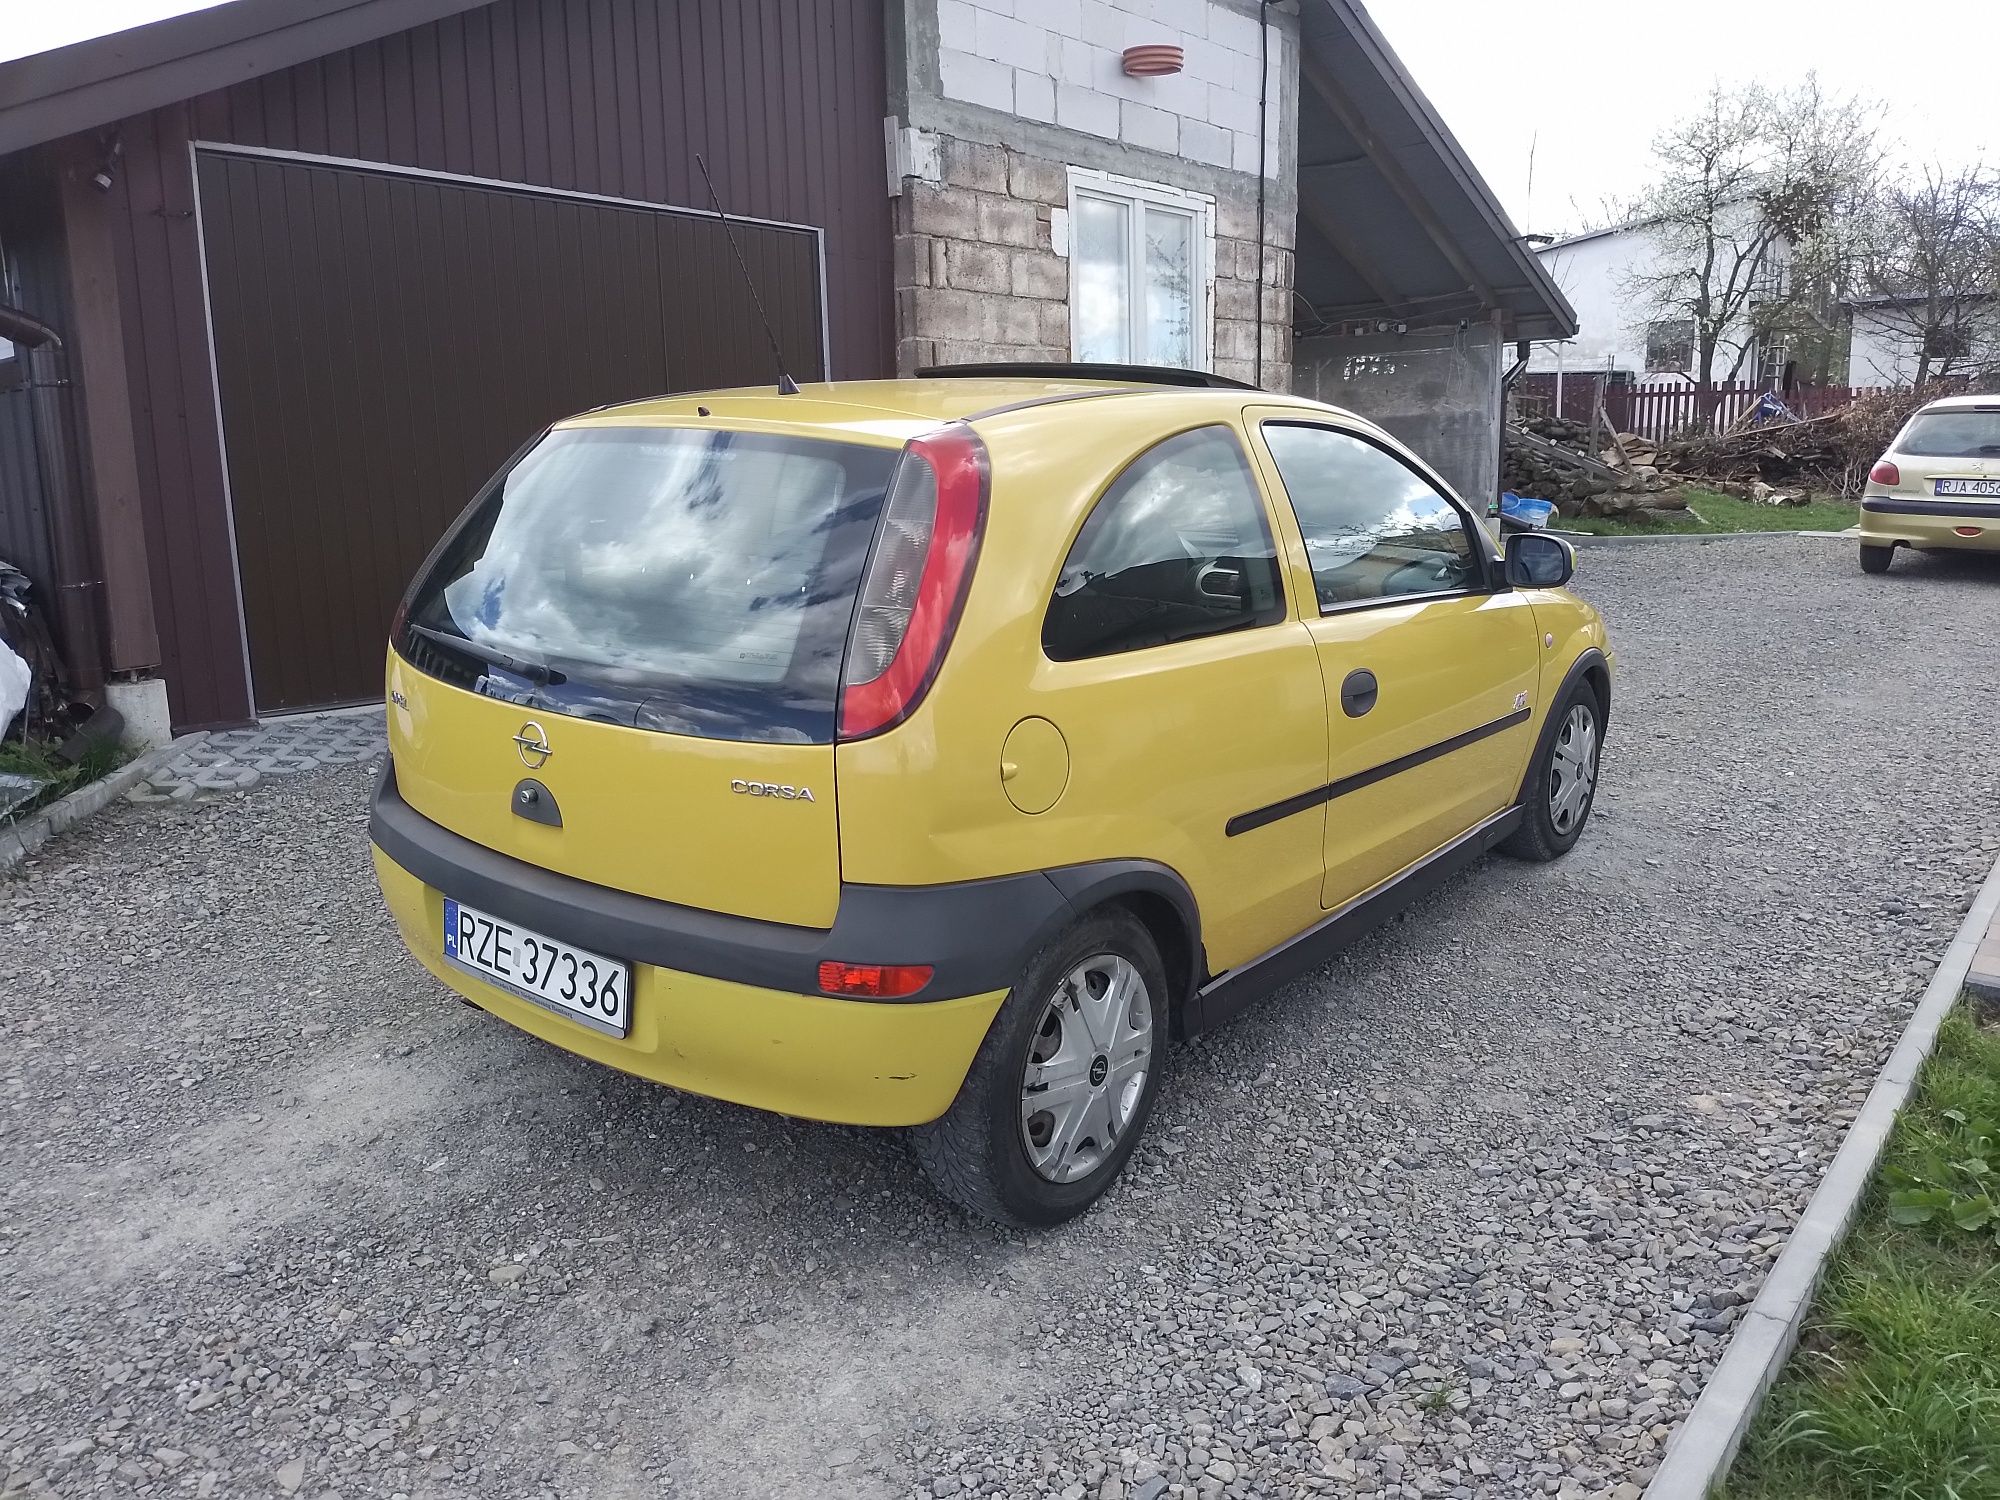 Opel corsa C 1.2, 2001 rok, wspomaganie